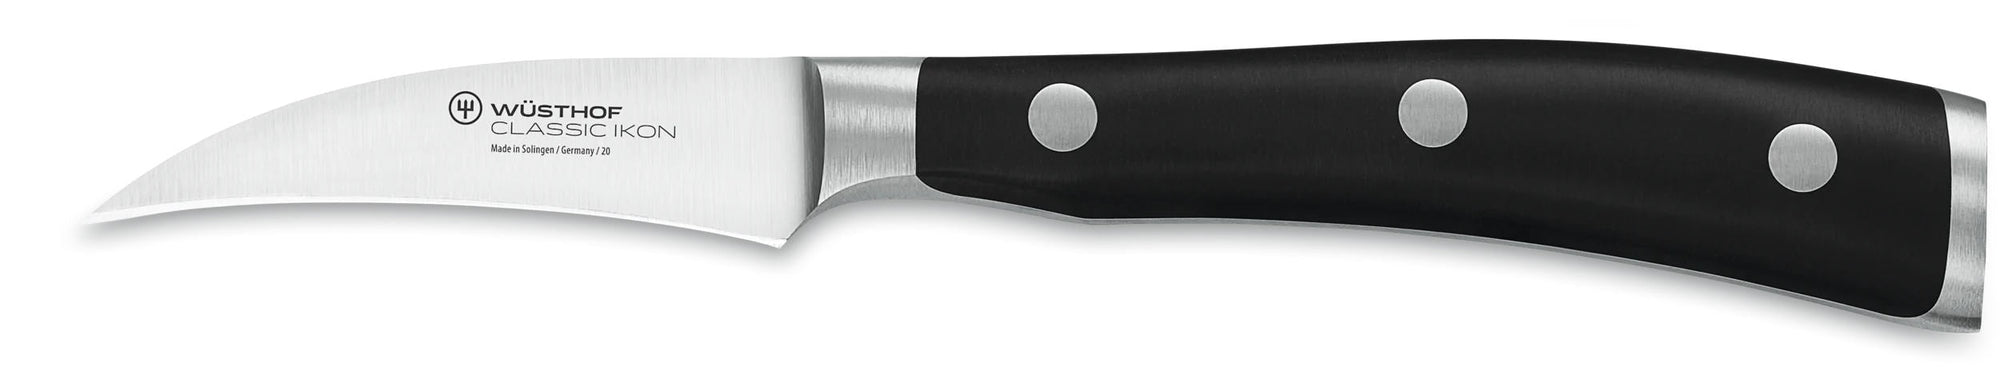 Wusthof Classic IKON Peeling Knife, 2.75-inch (7 cm) - 4020